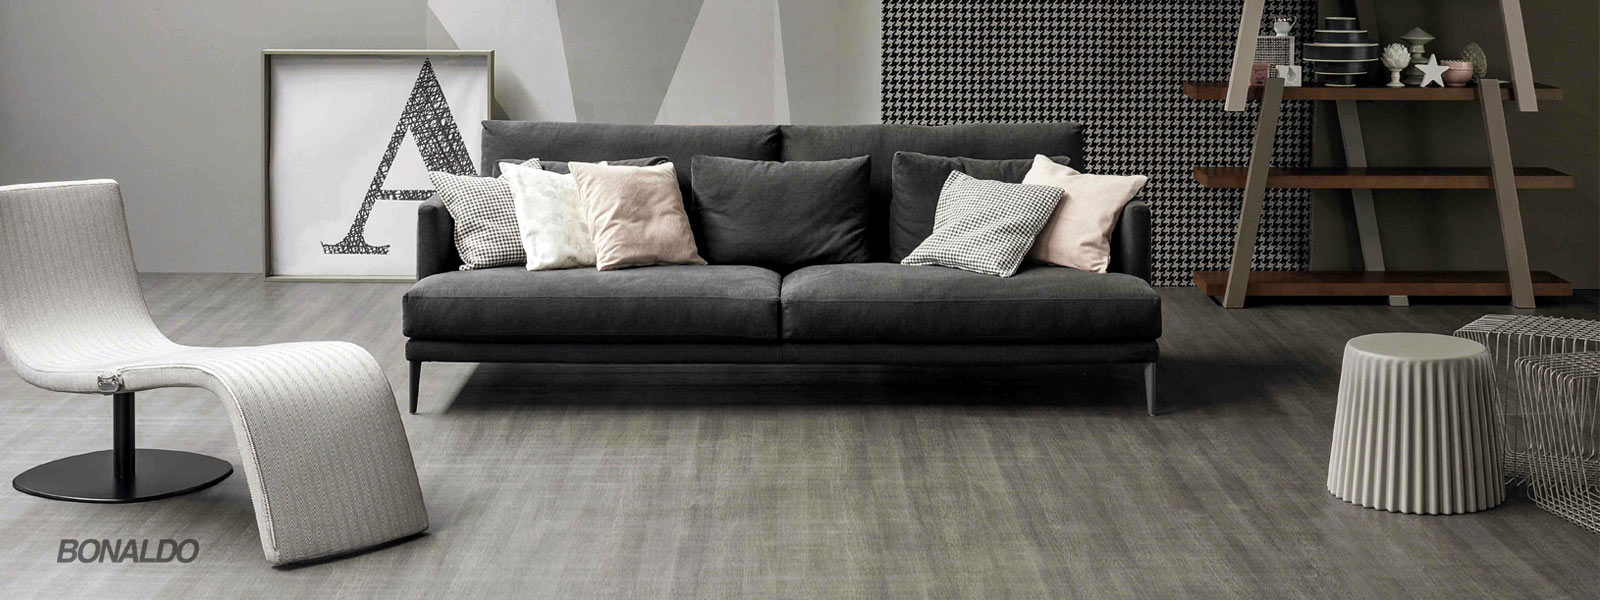 Bonaldo modern Italian sofa bed